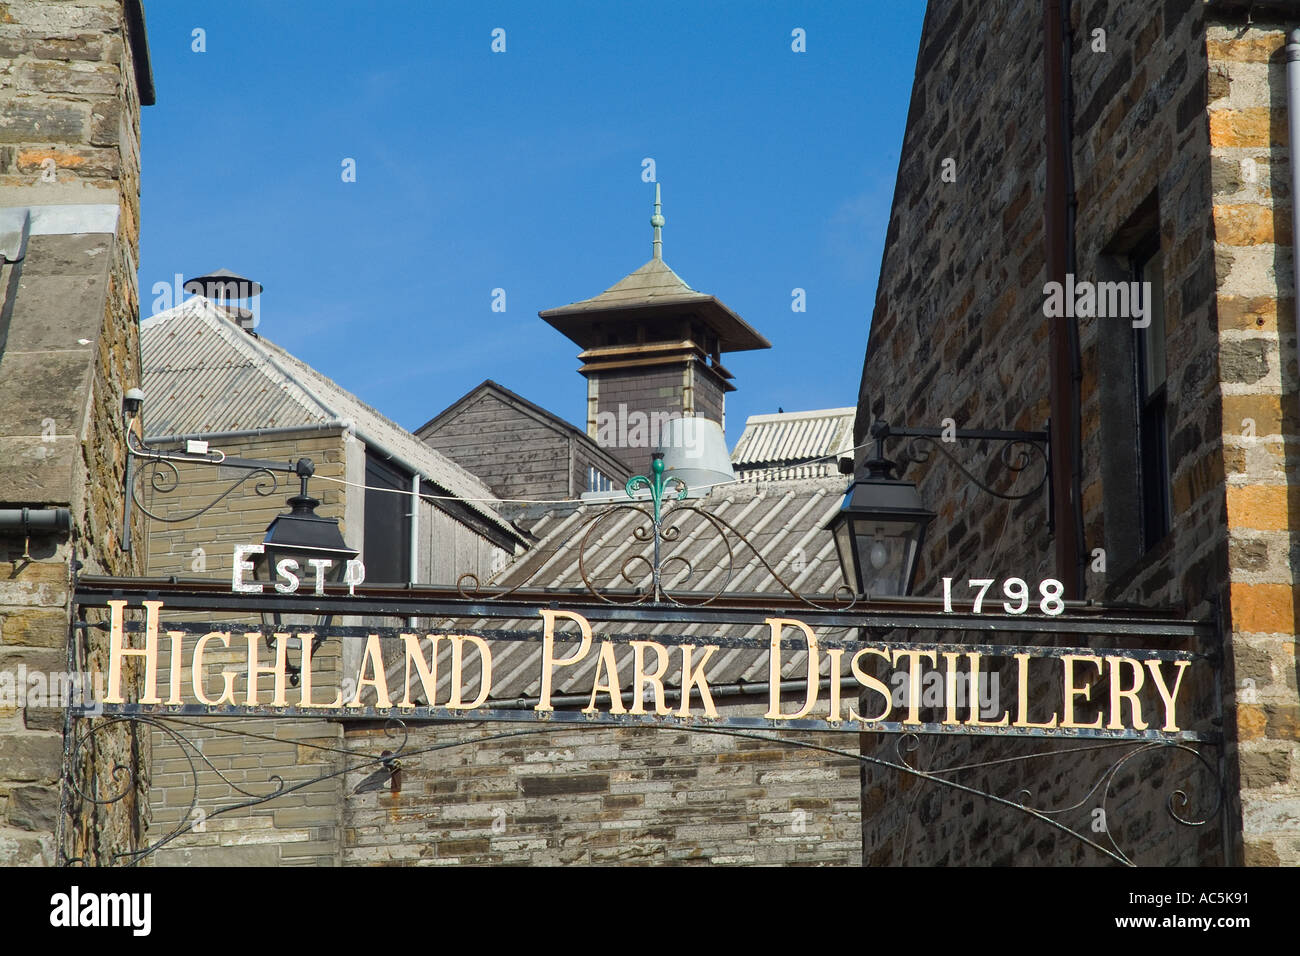 dh Highland Park Distillery KIRKWALL ORKNEY Scotland Malt whisky distillery sign roof tops Kiln chimney stack orkneys scottish whiskey Stock Photo